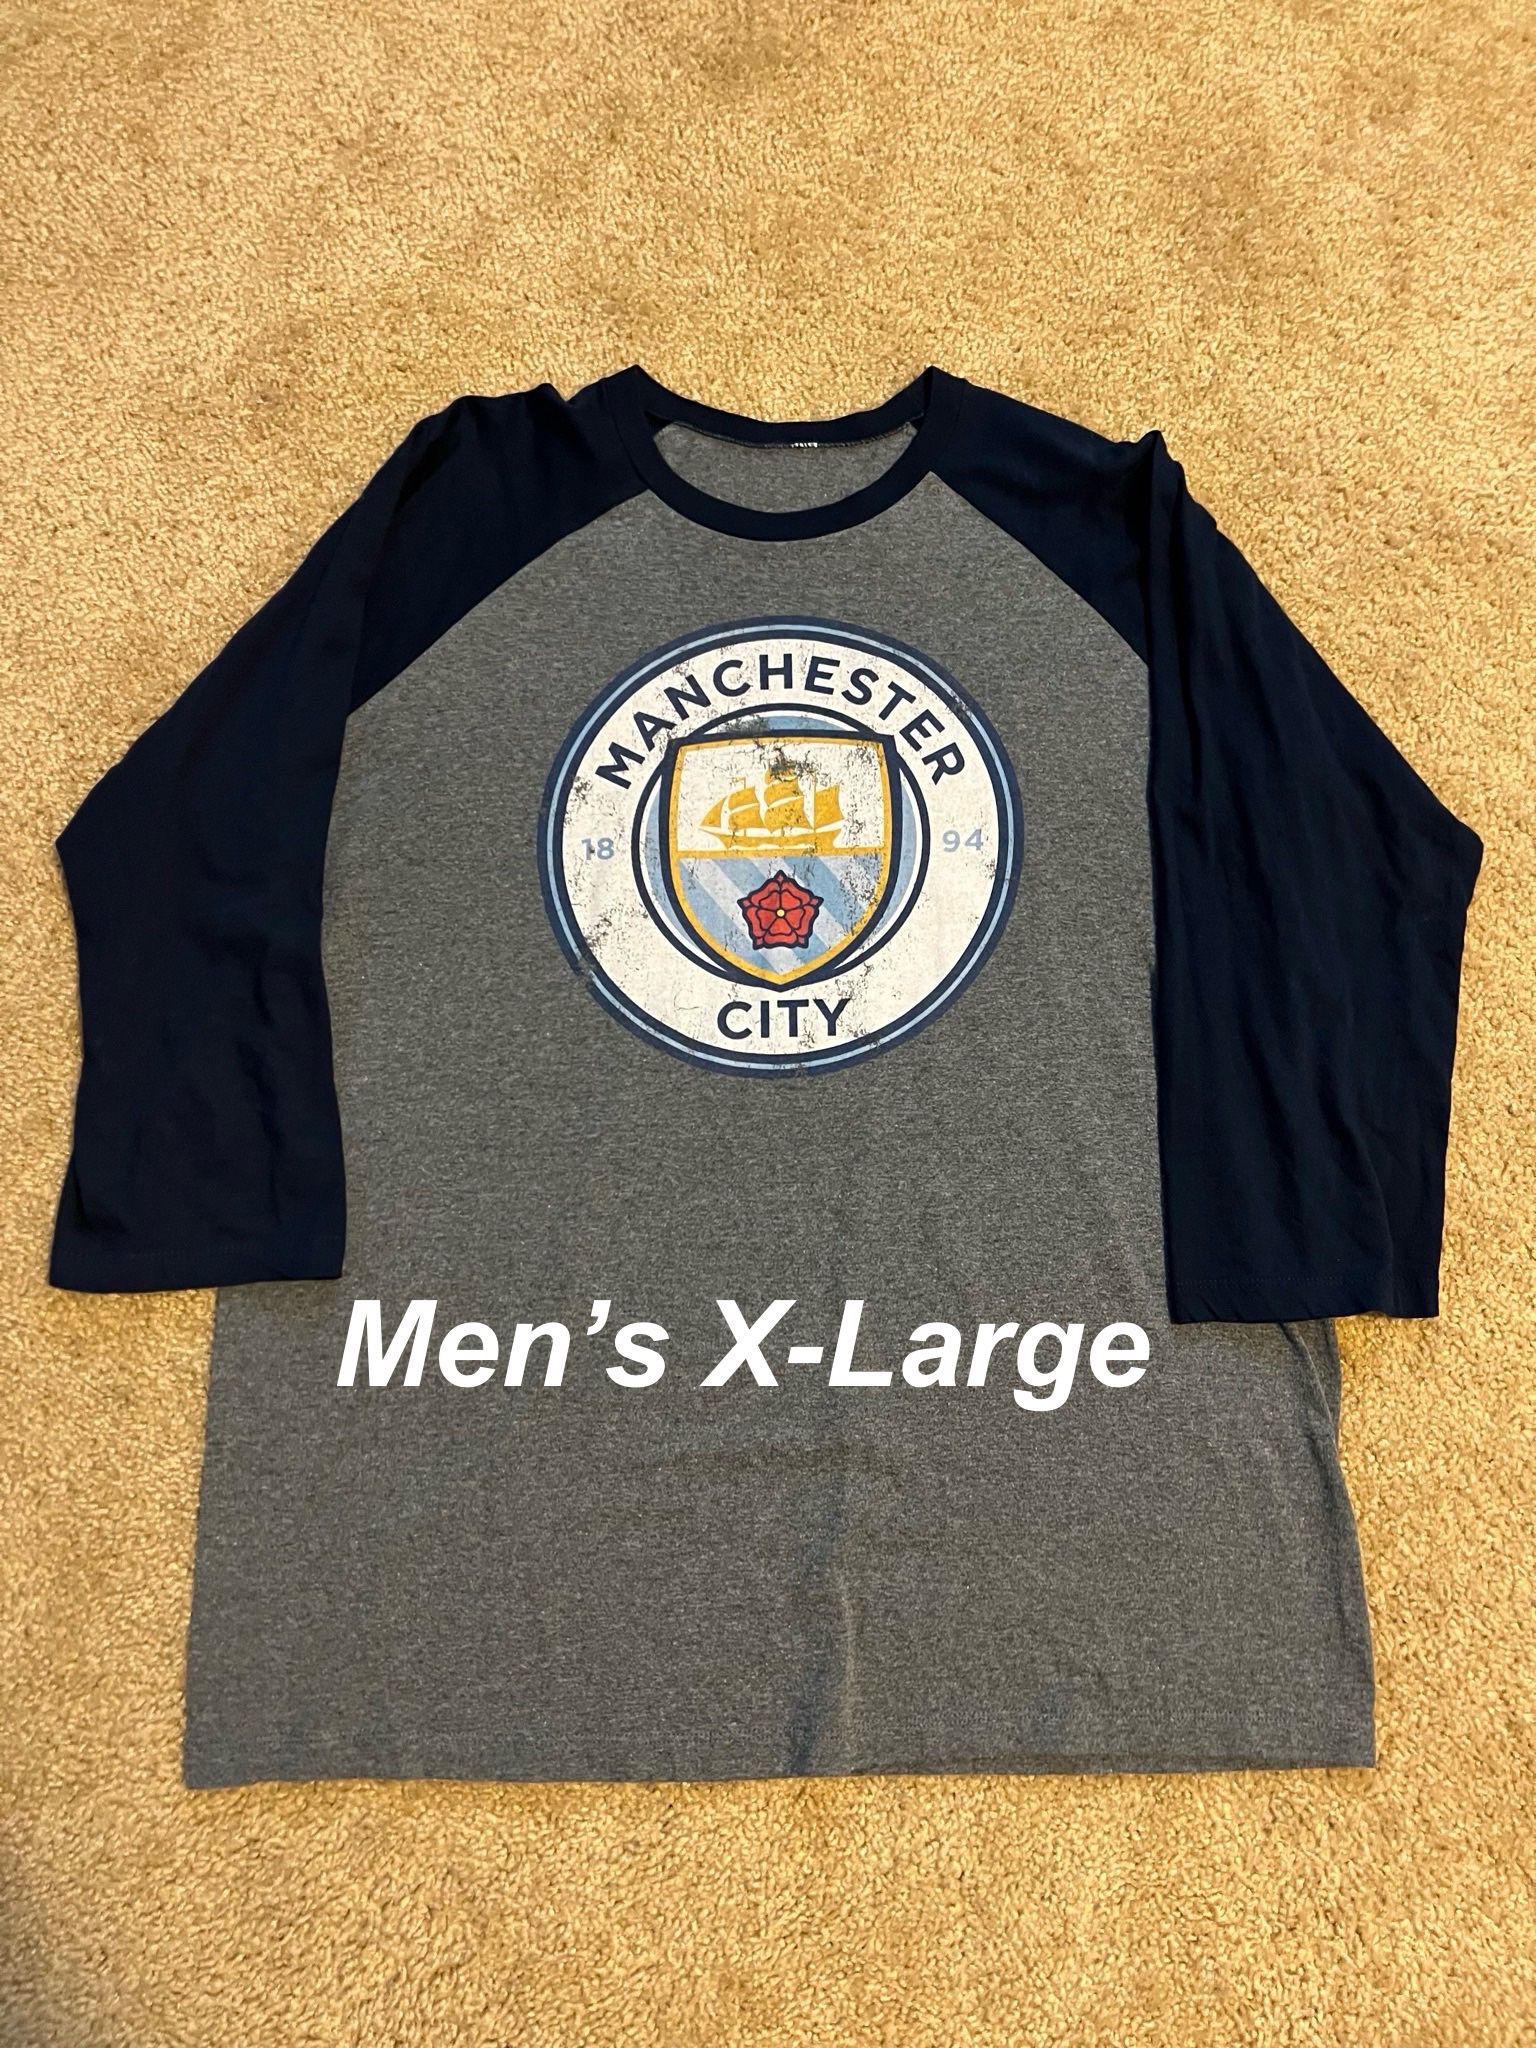 NIKE FC / Manchester City MAN CITY MCFC PL Premier League Soccer Futbol Baseball T-Shirt / COOL SHIRTS / Men’s X-Large / Like New w/o Tags!!